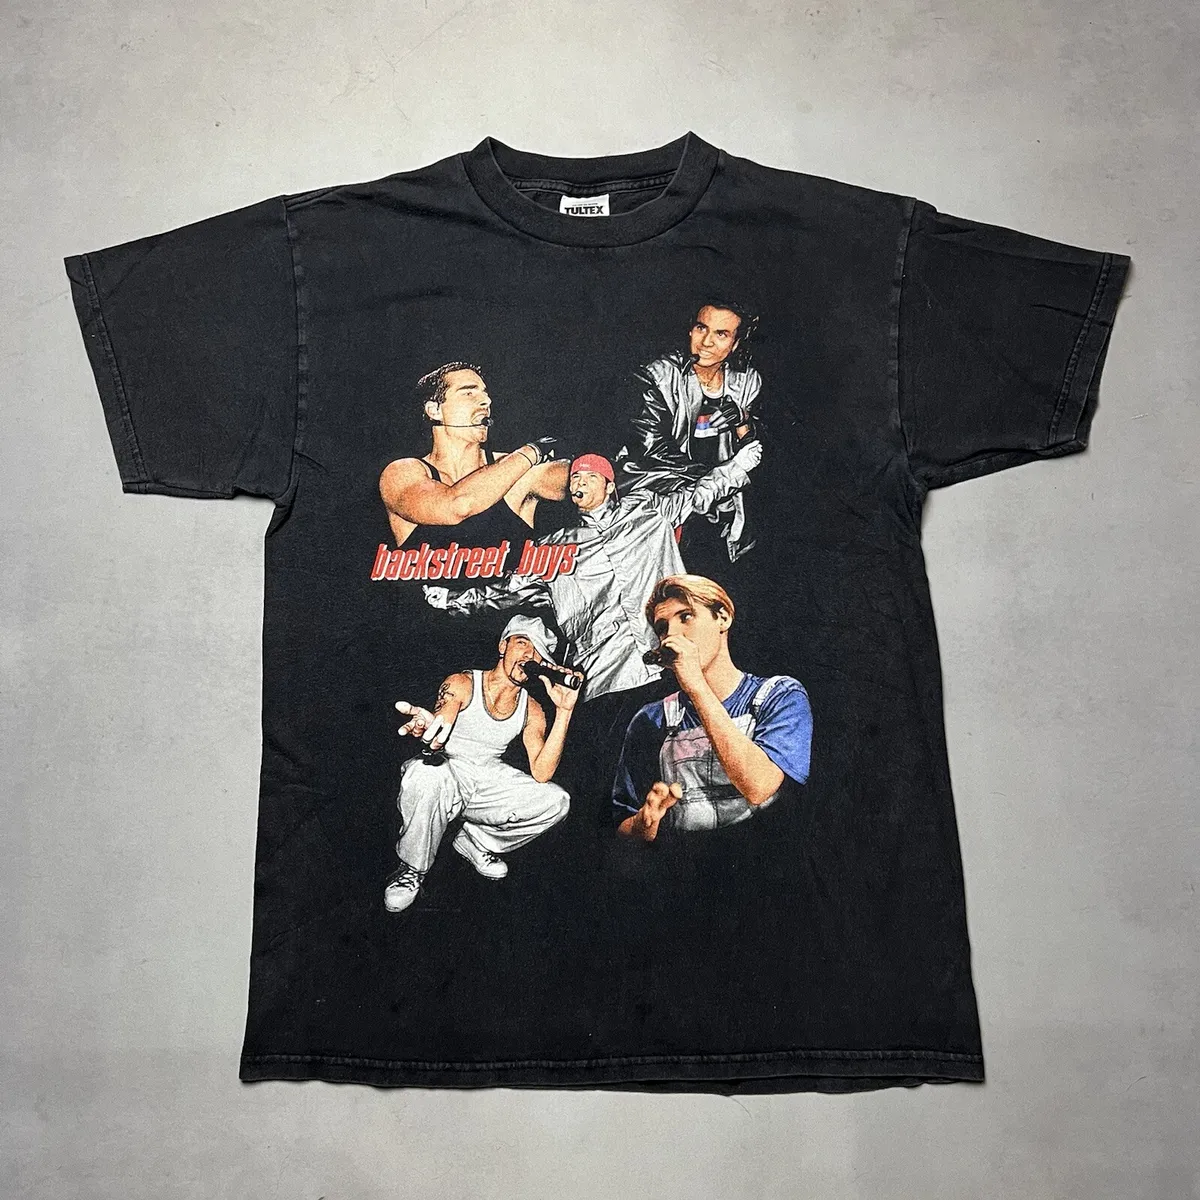 Vintage Backstreet Boys Boy Tour Shirt Large 98 eBay T Band 